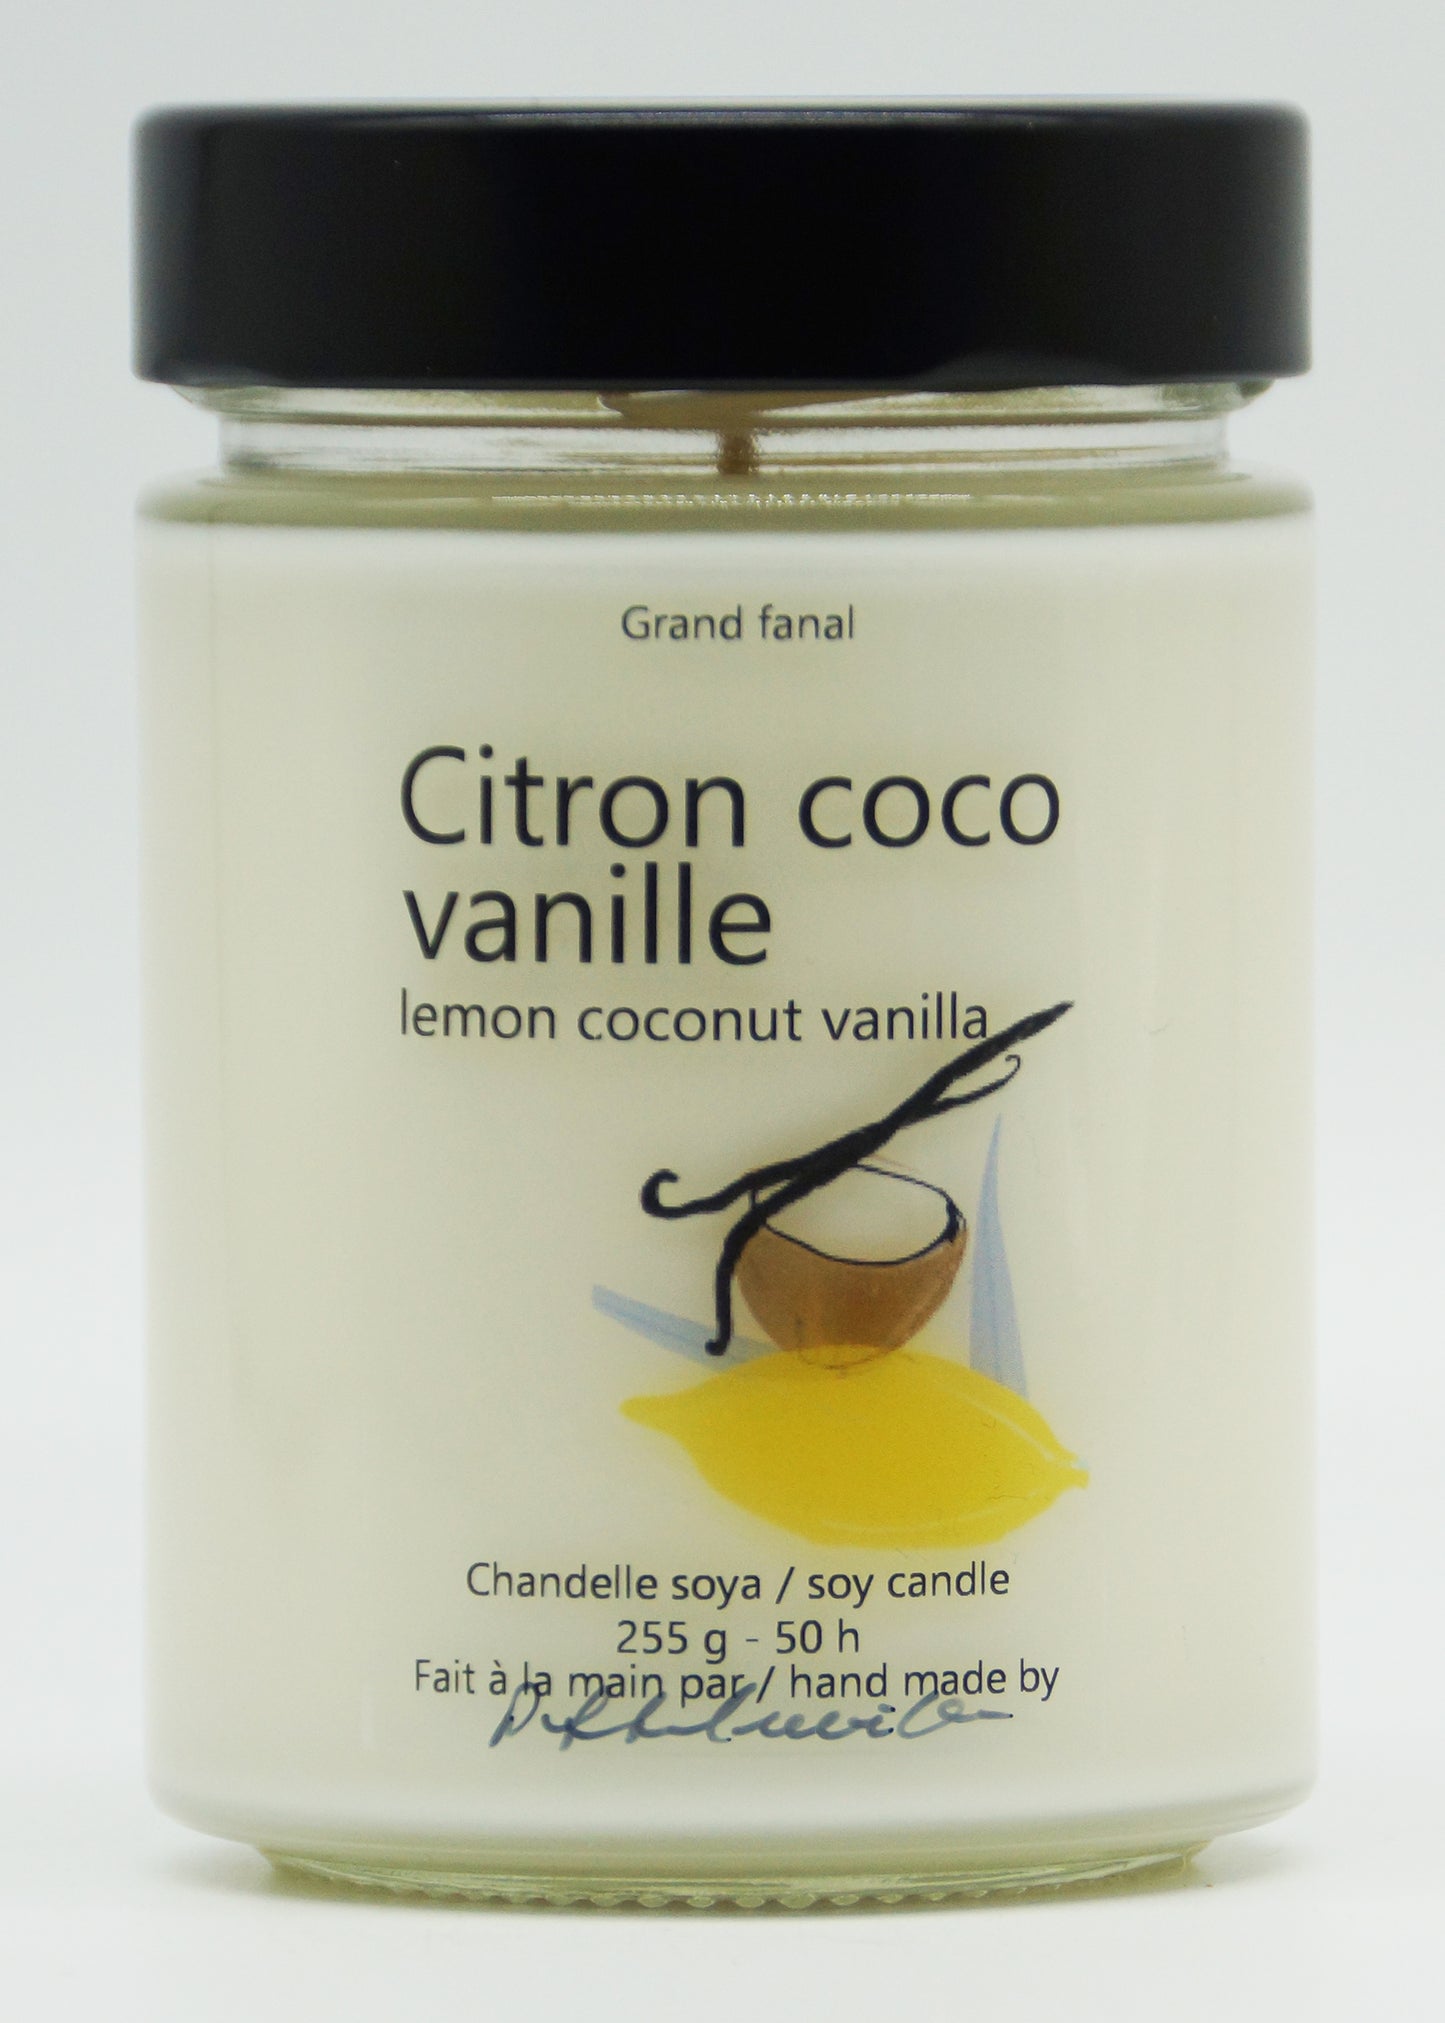 Citron coco vanille